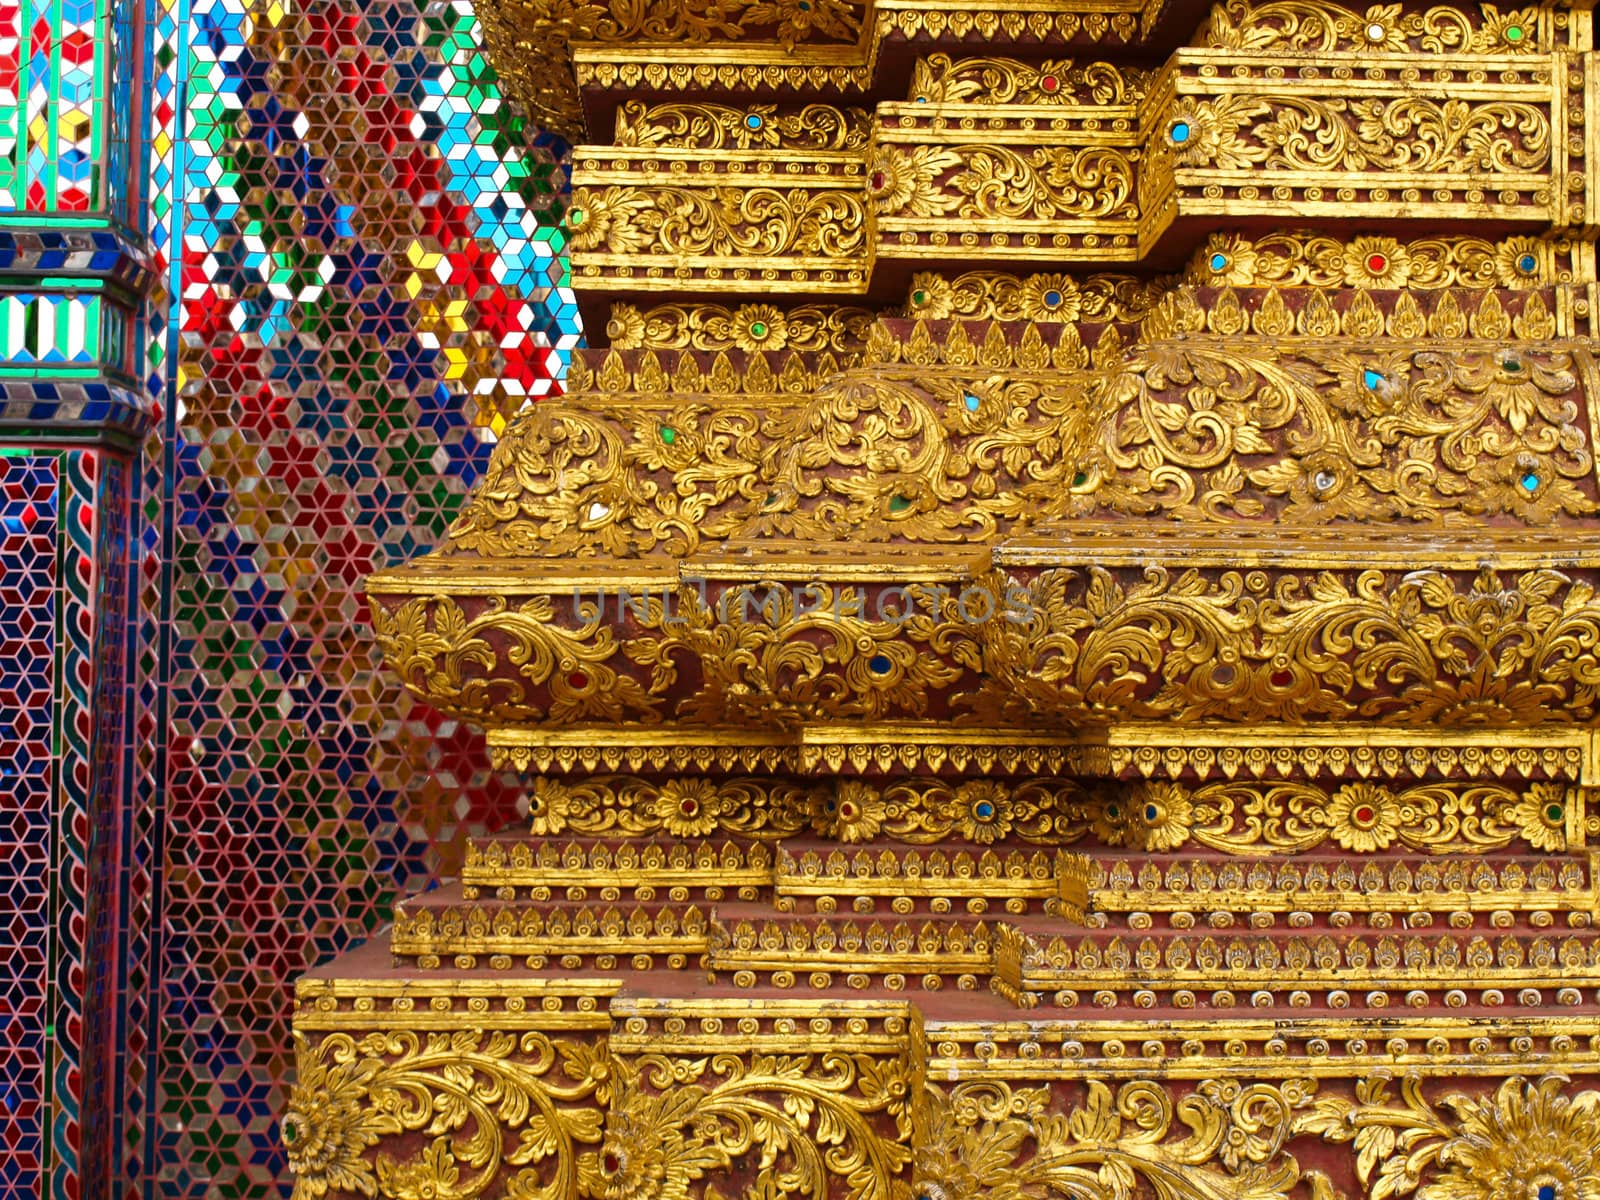 Golden engraved stucco decoration in Buddhist vihara in Thailand by gururugu